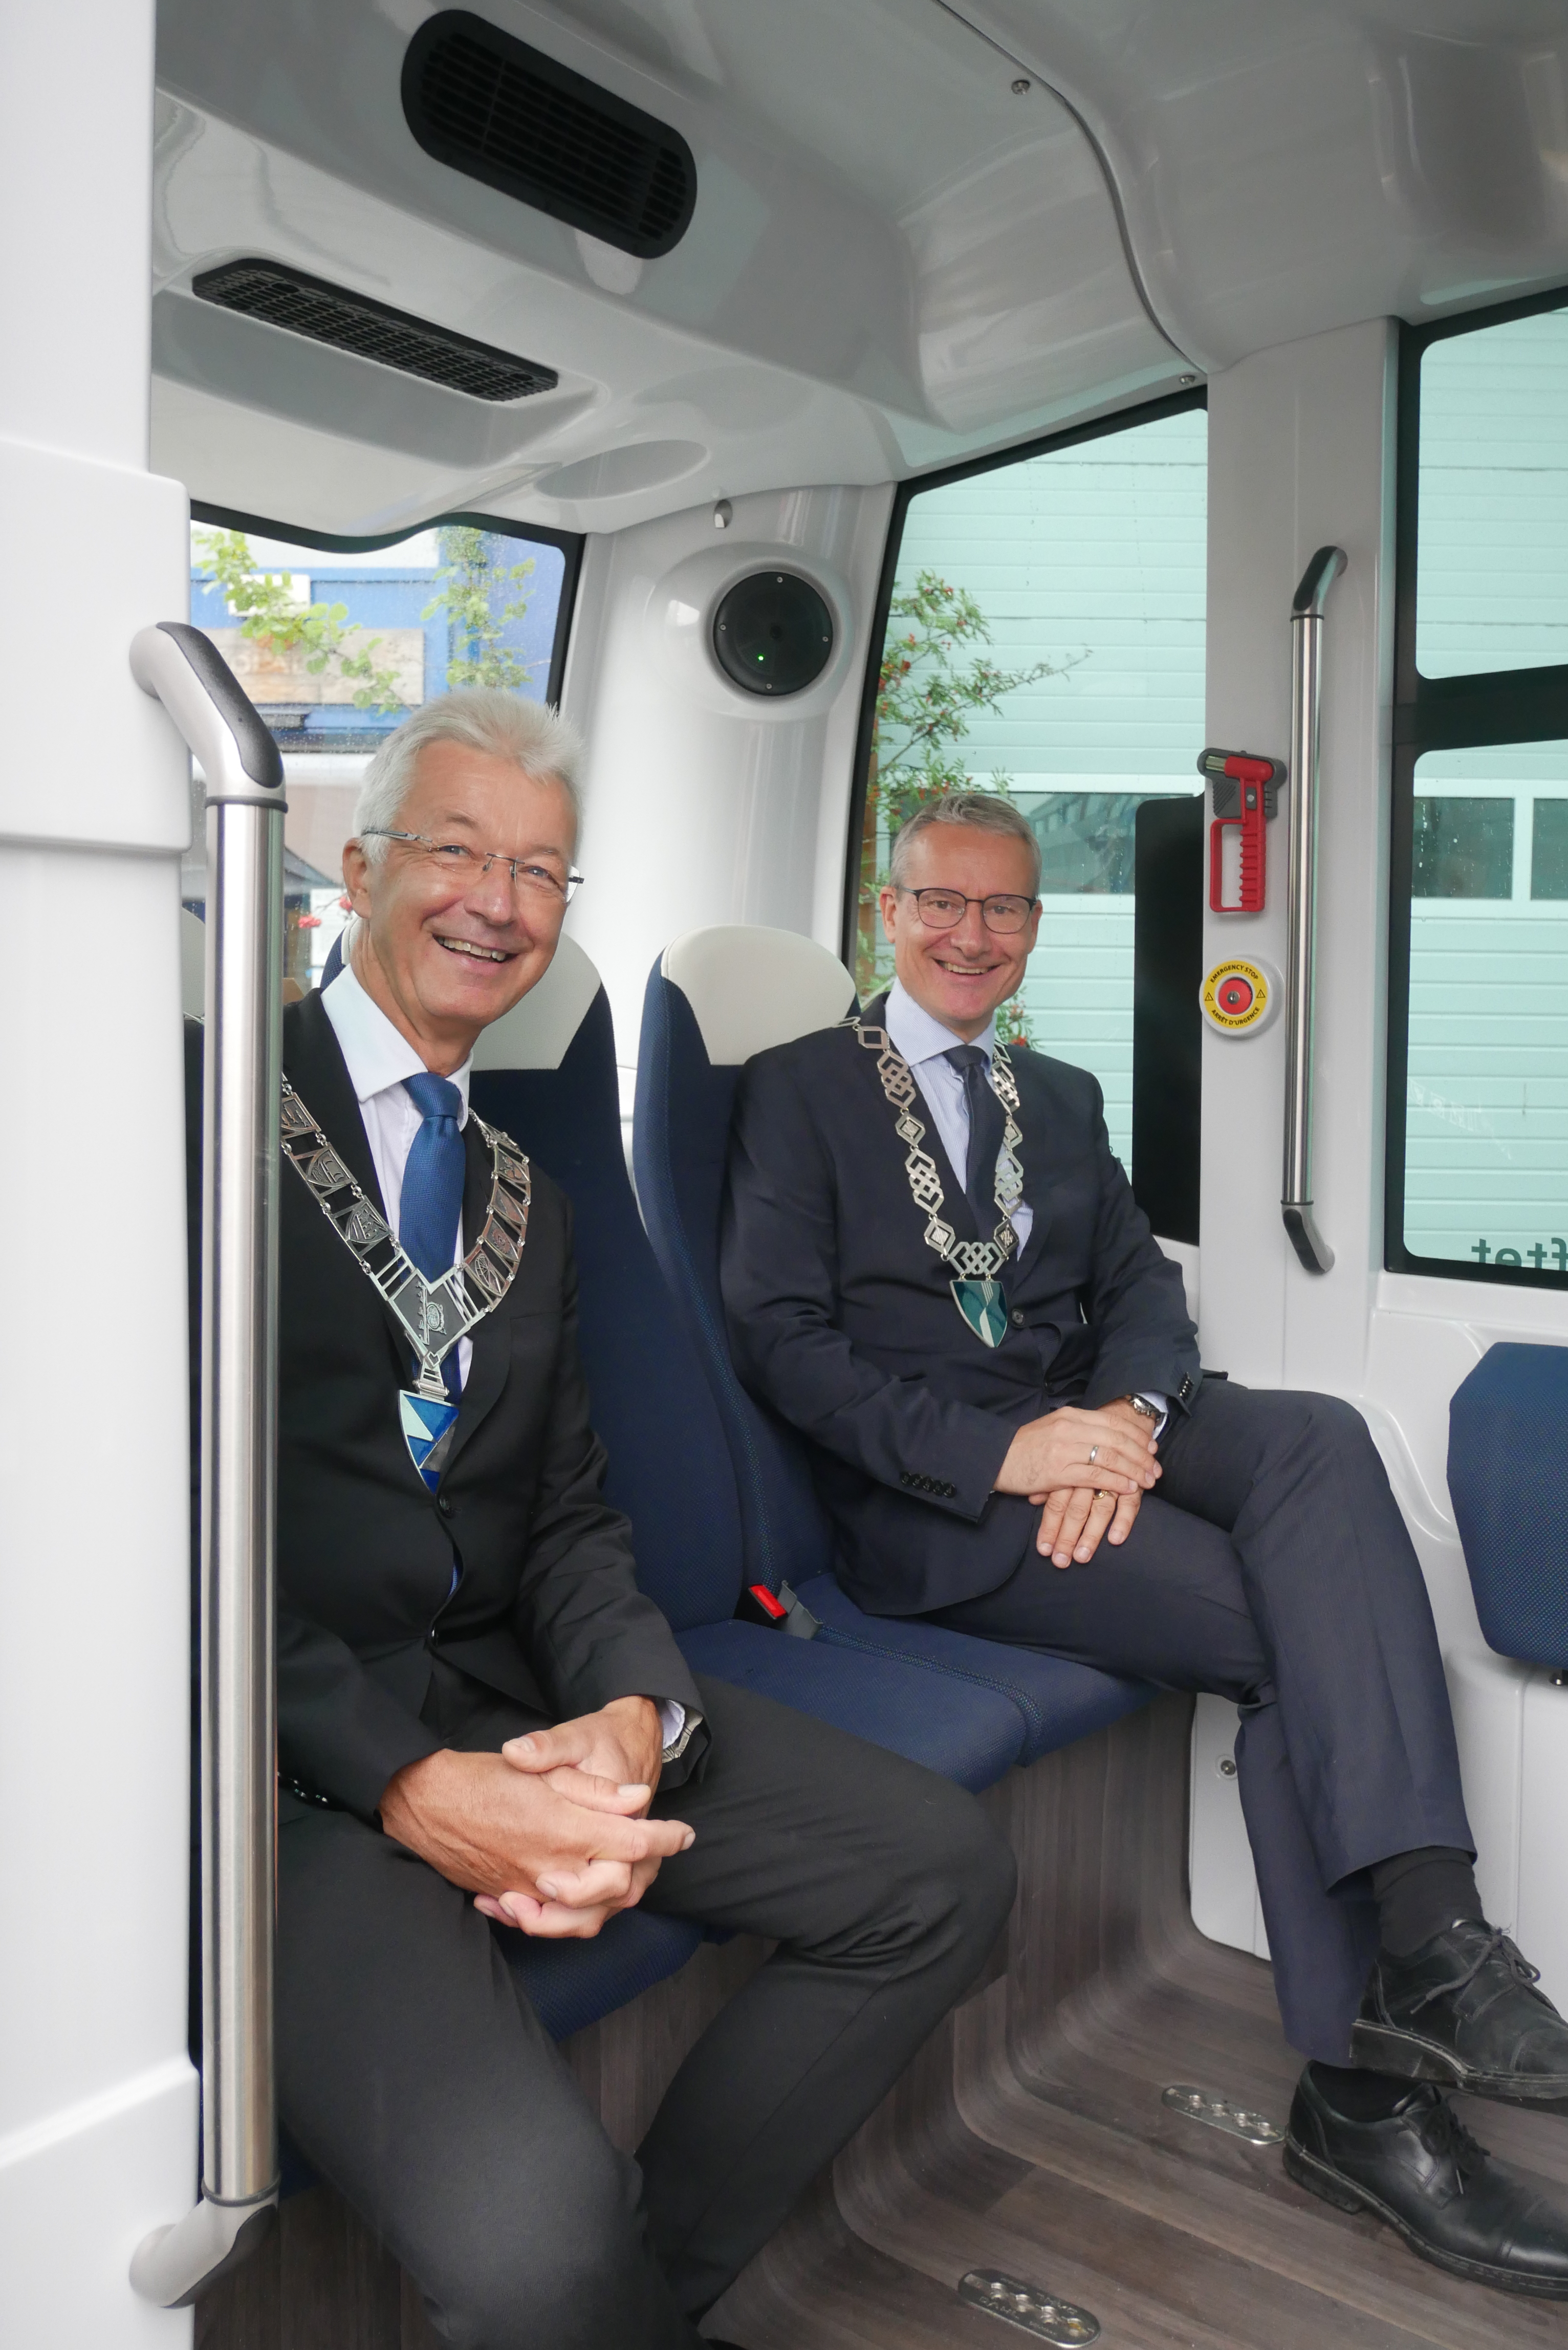 Fylkesordførar Jon Askeland og ordførar i Sunnfjord Olve Grotle om bord i den sjølvkøyrande bussen Olai.